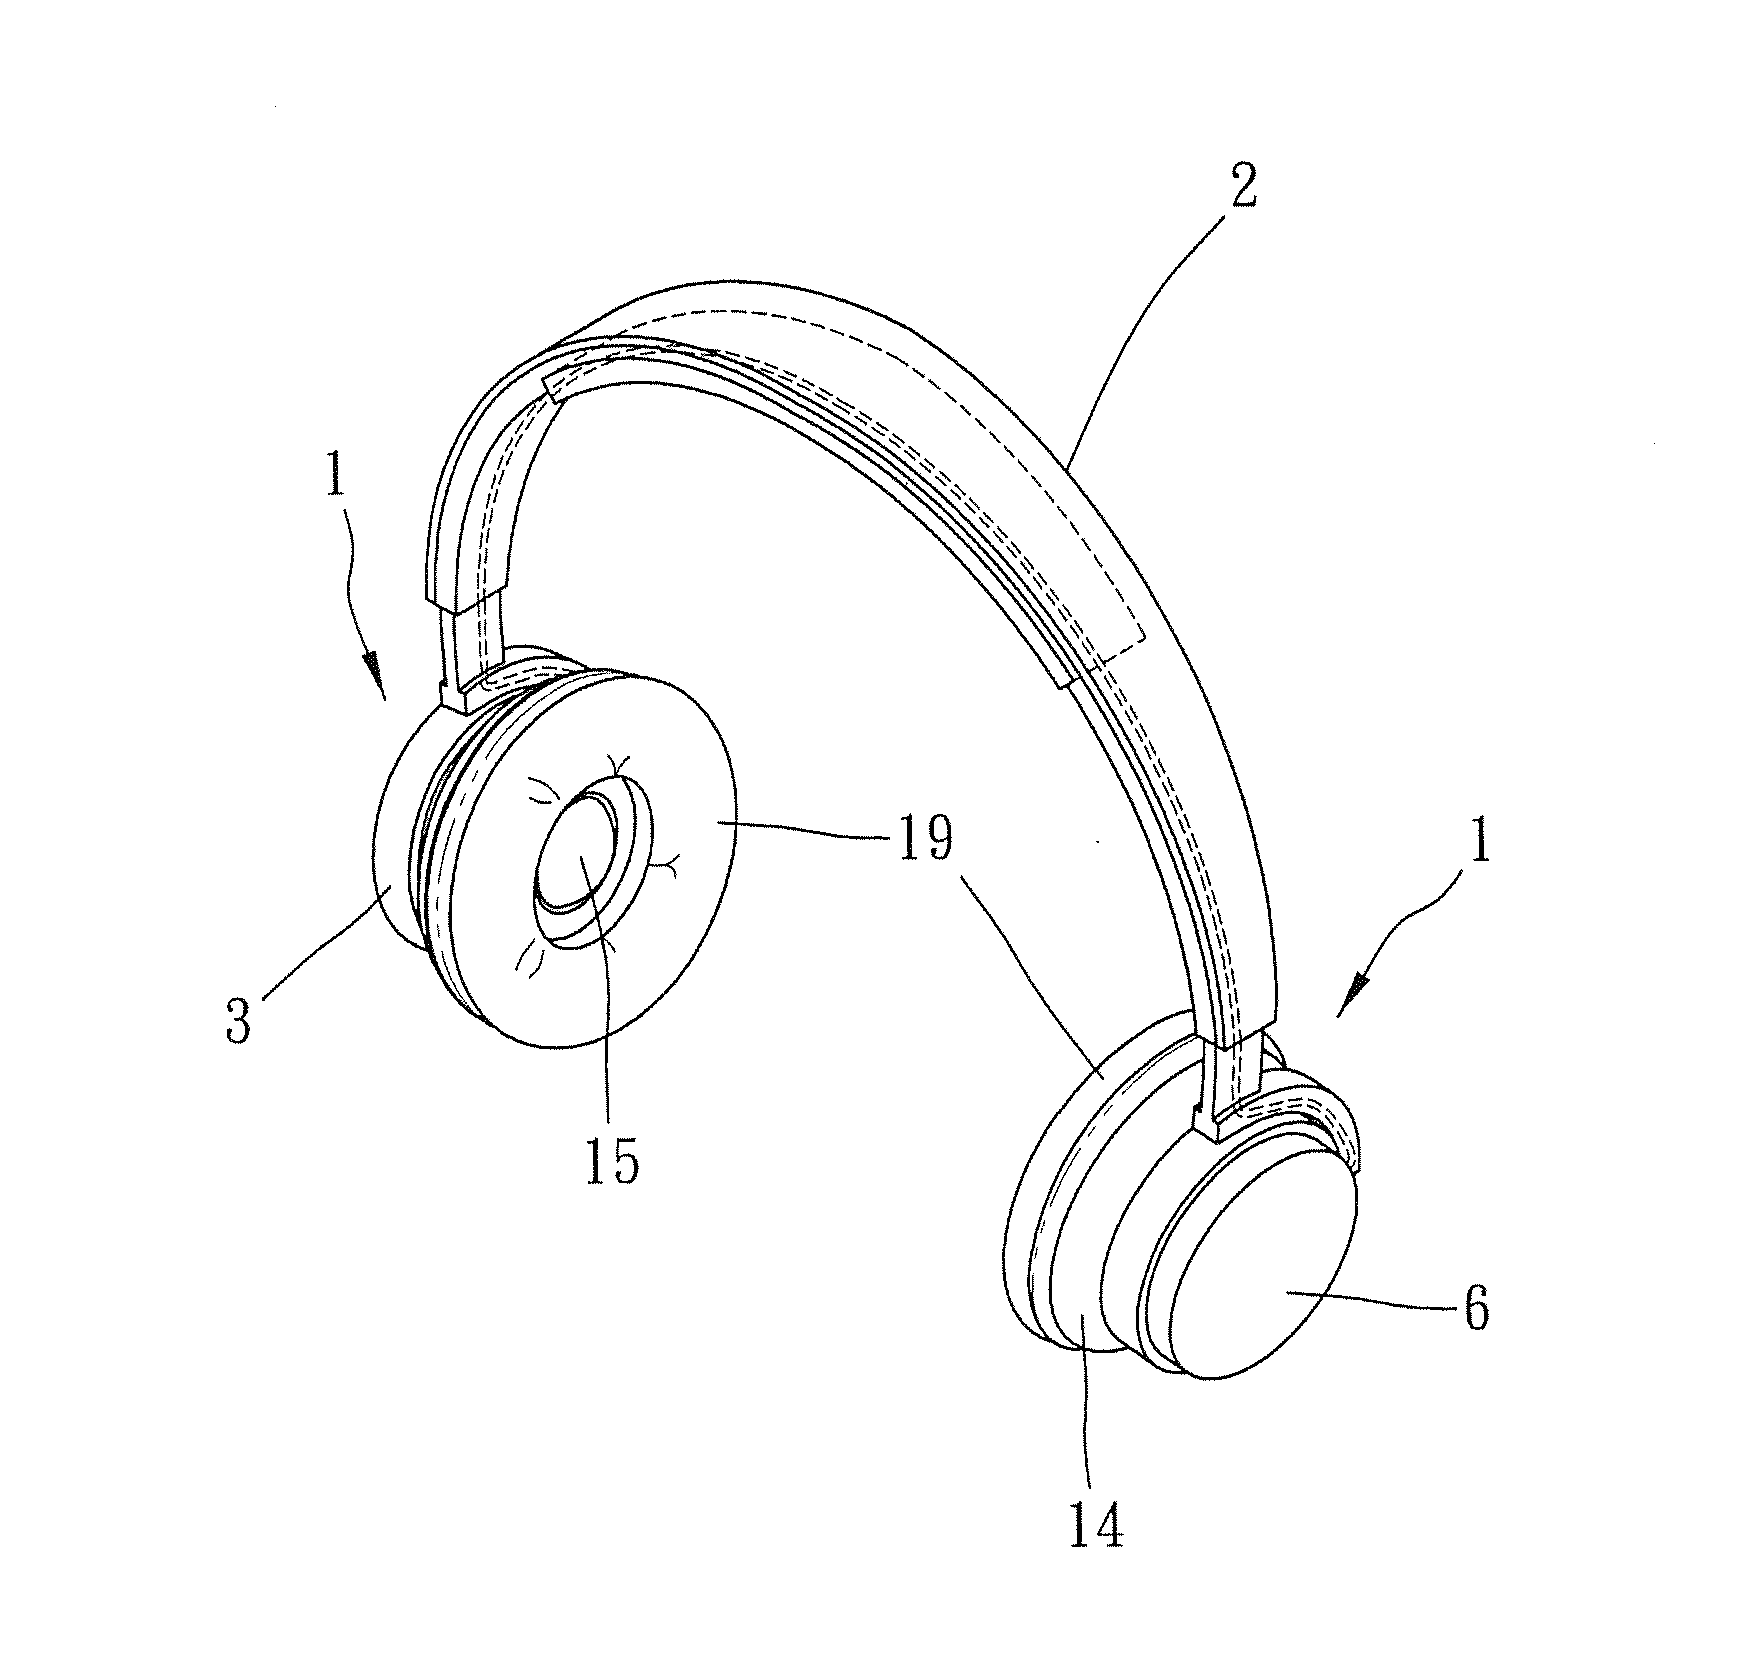 Modular headphone system